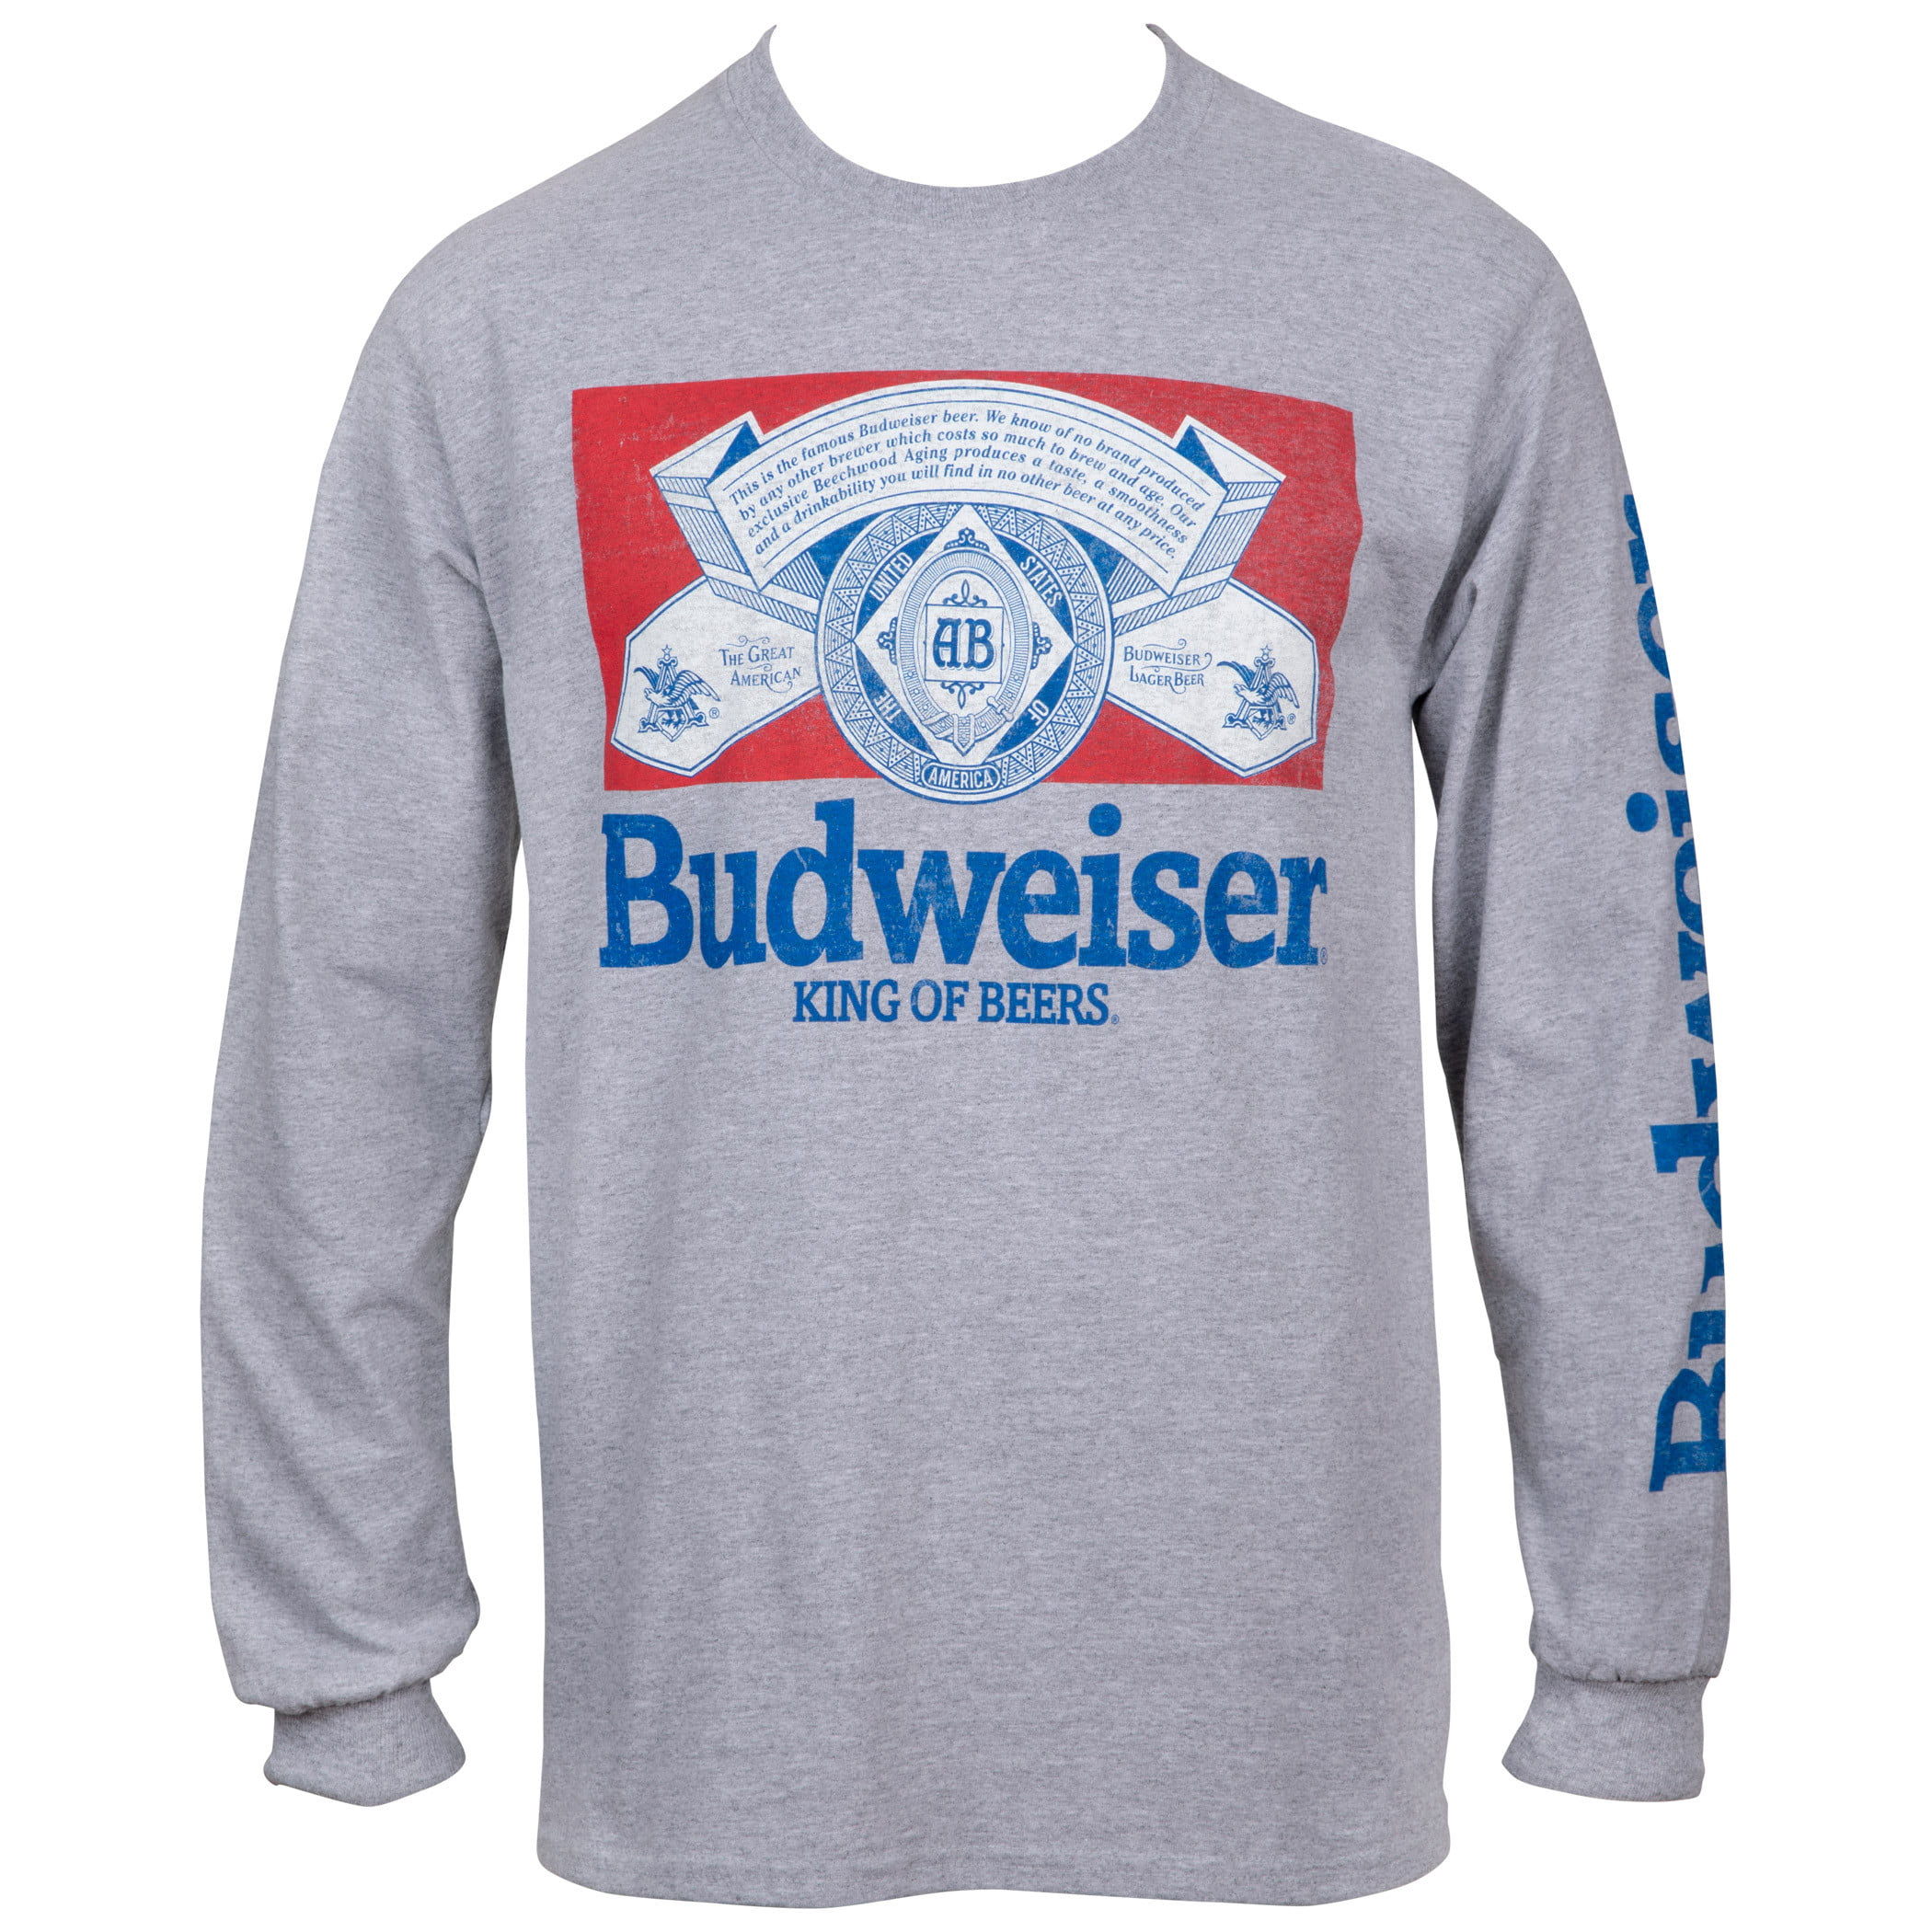 Retro BUD DRY Beer Logo Employee Uniform Shirt Patch Anheuser Busch Brewery NOS 